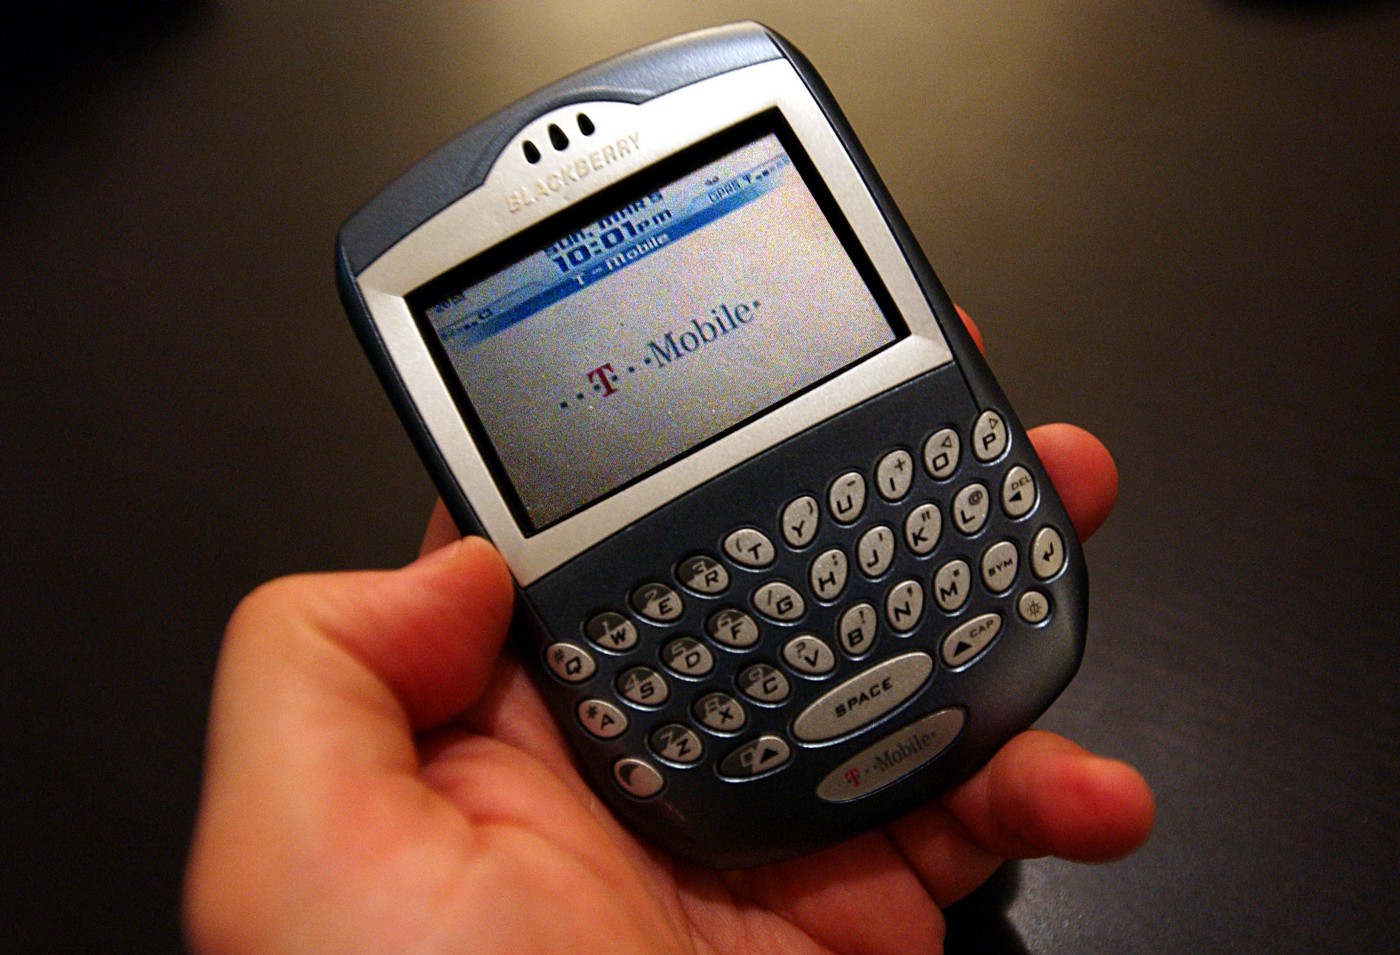 Year 2000 relics - blackberry 7290 - Parts Blackberry un 12 pm Tmobile ..T. Mobile Dei Sym z Ca Ra Gx Space Mobile